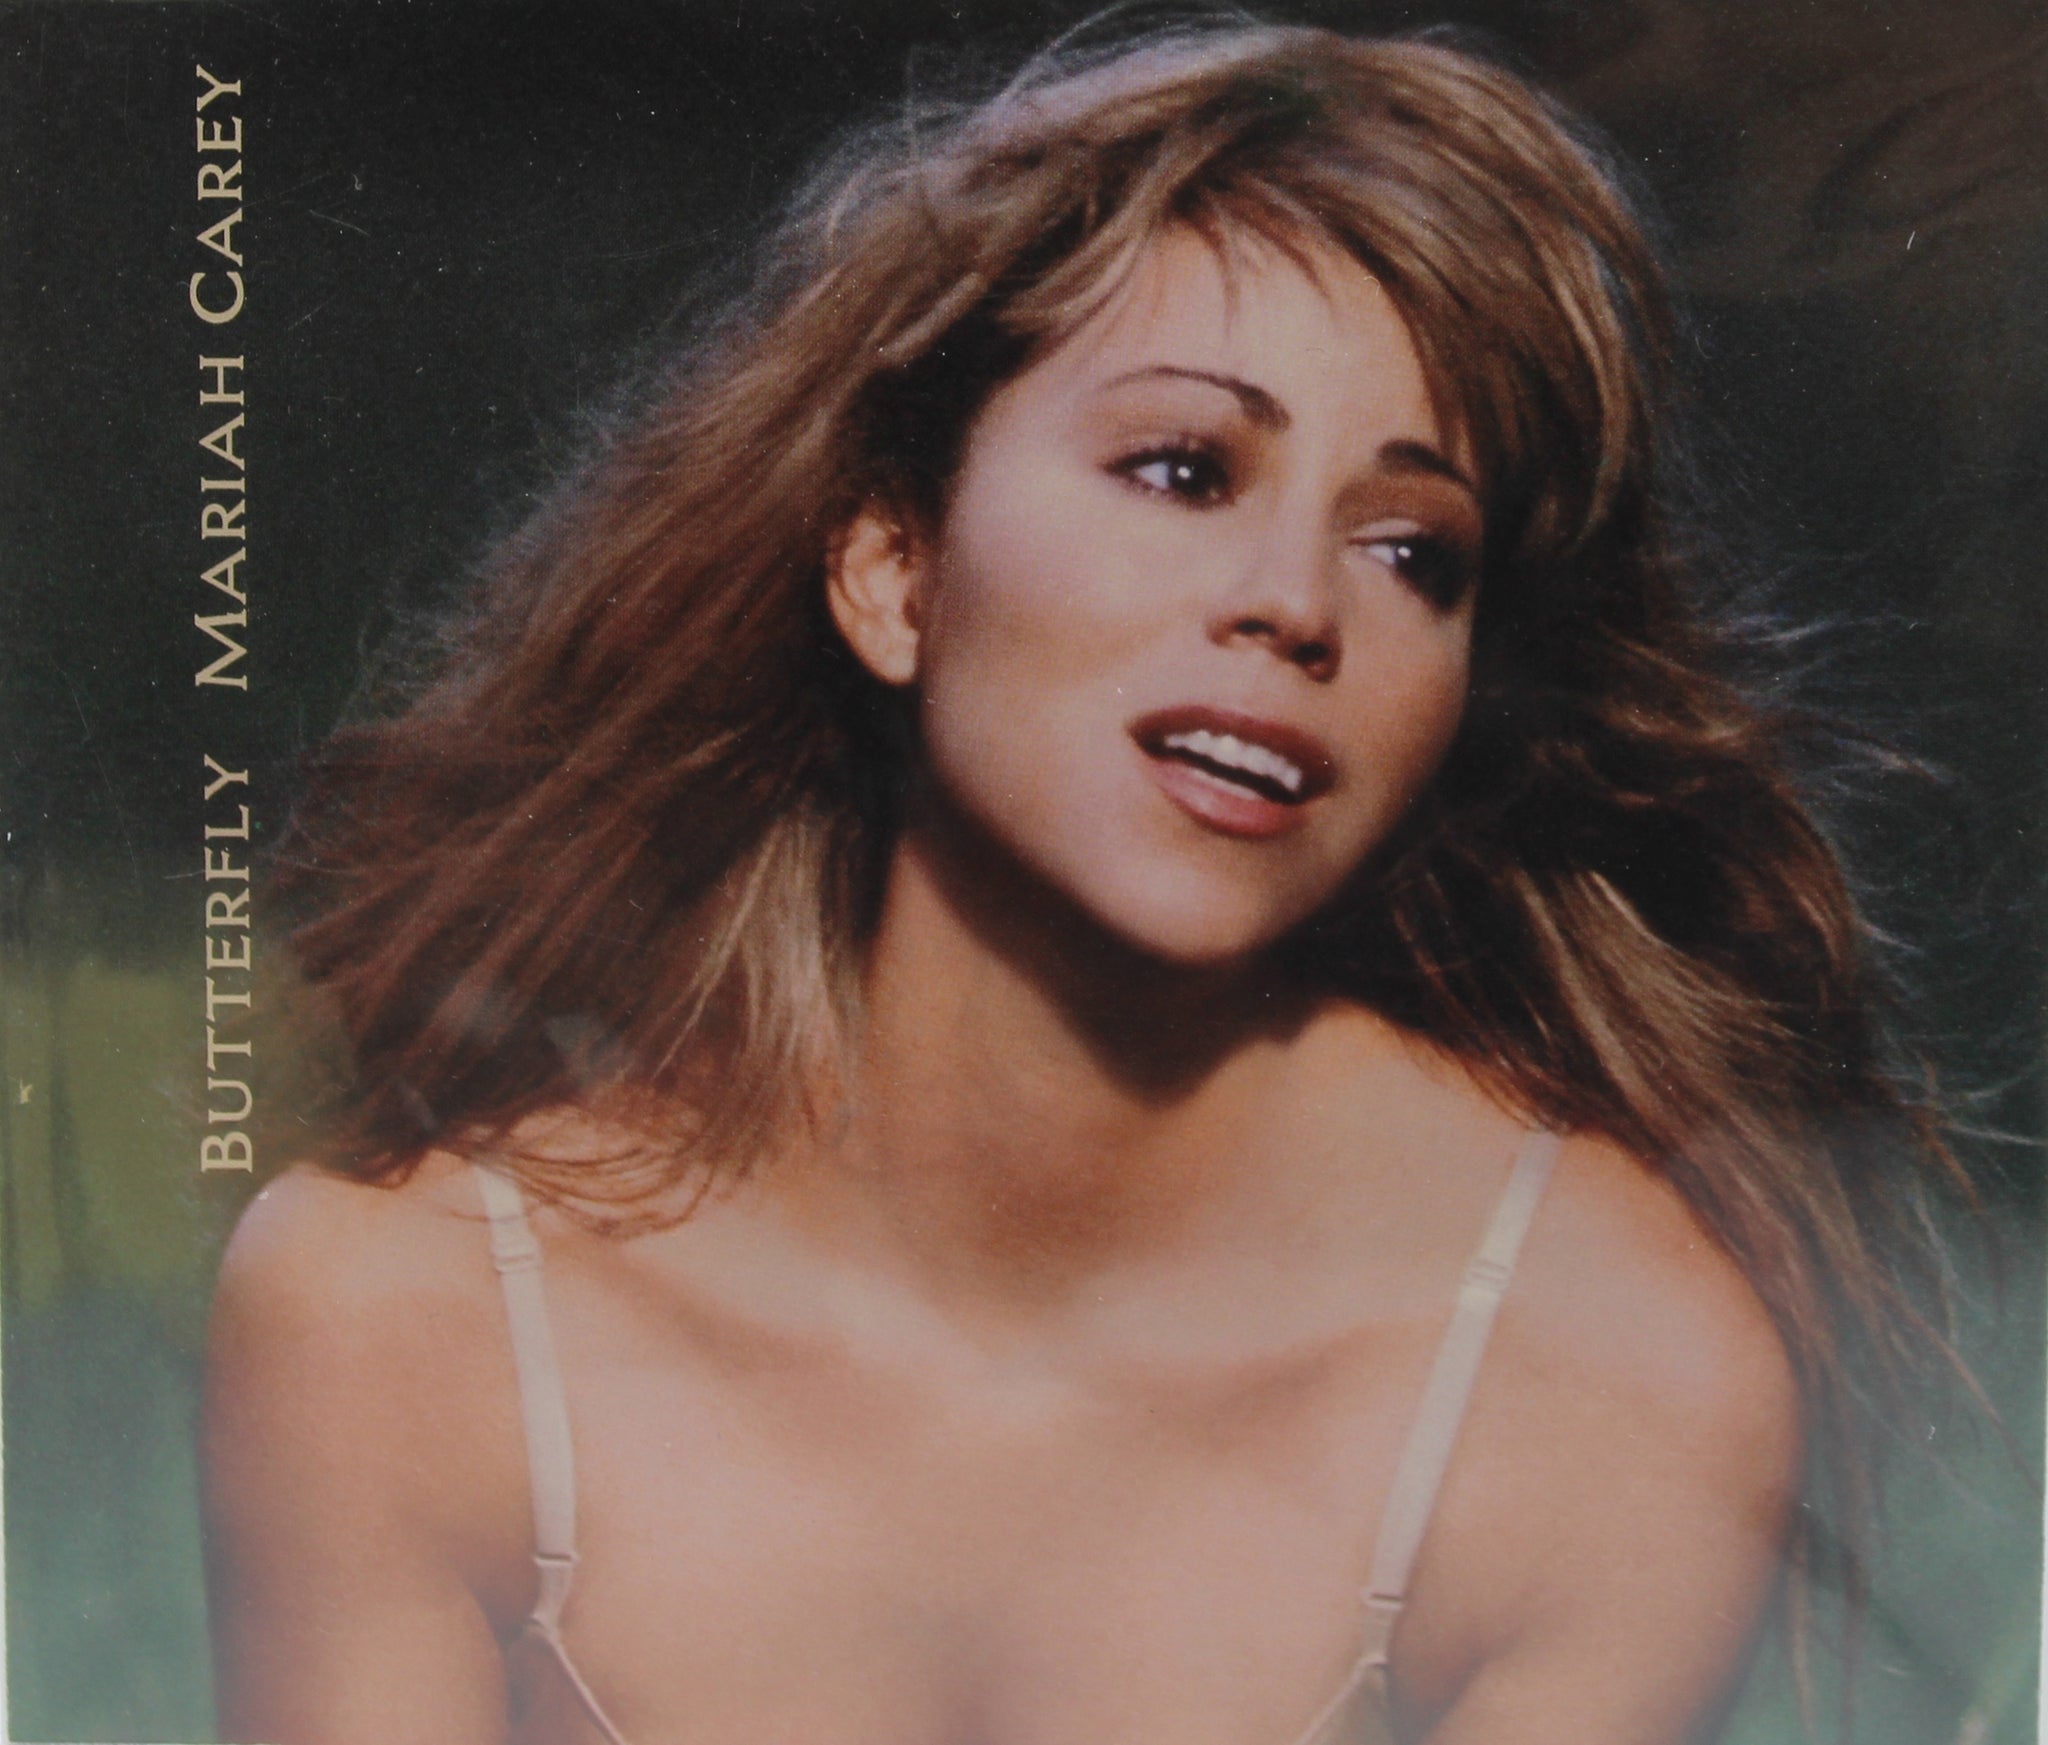 Mariah Carey, Butterfly, CD Promo, Mexico 1997 (CD 639 